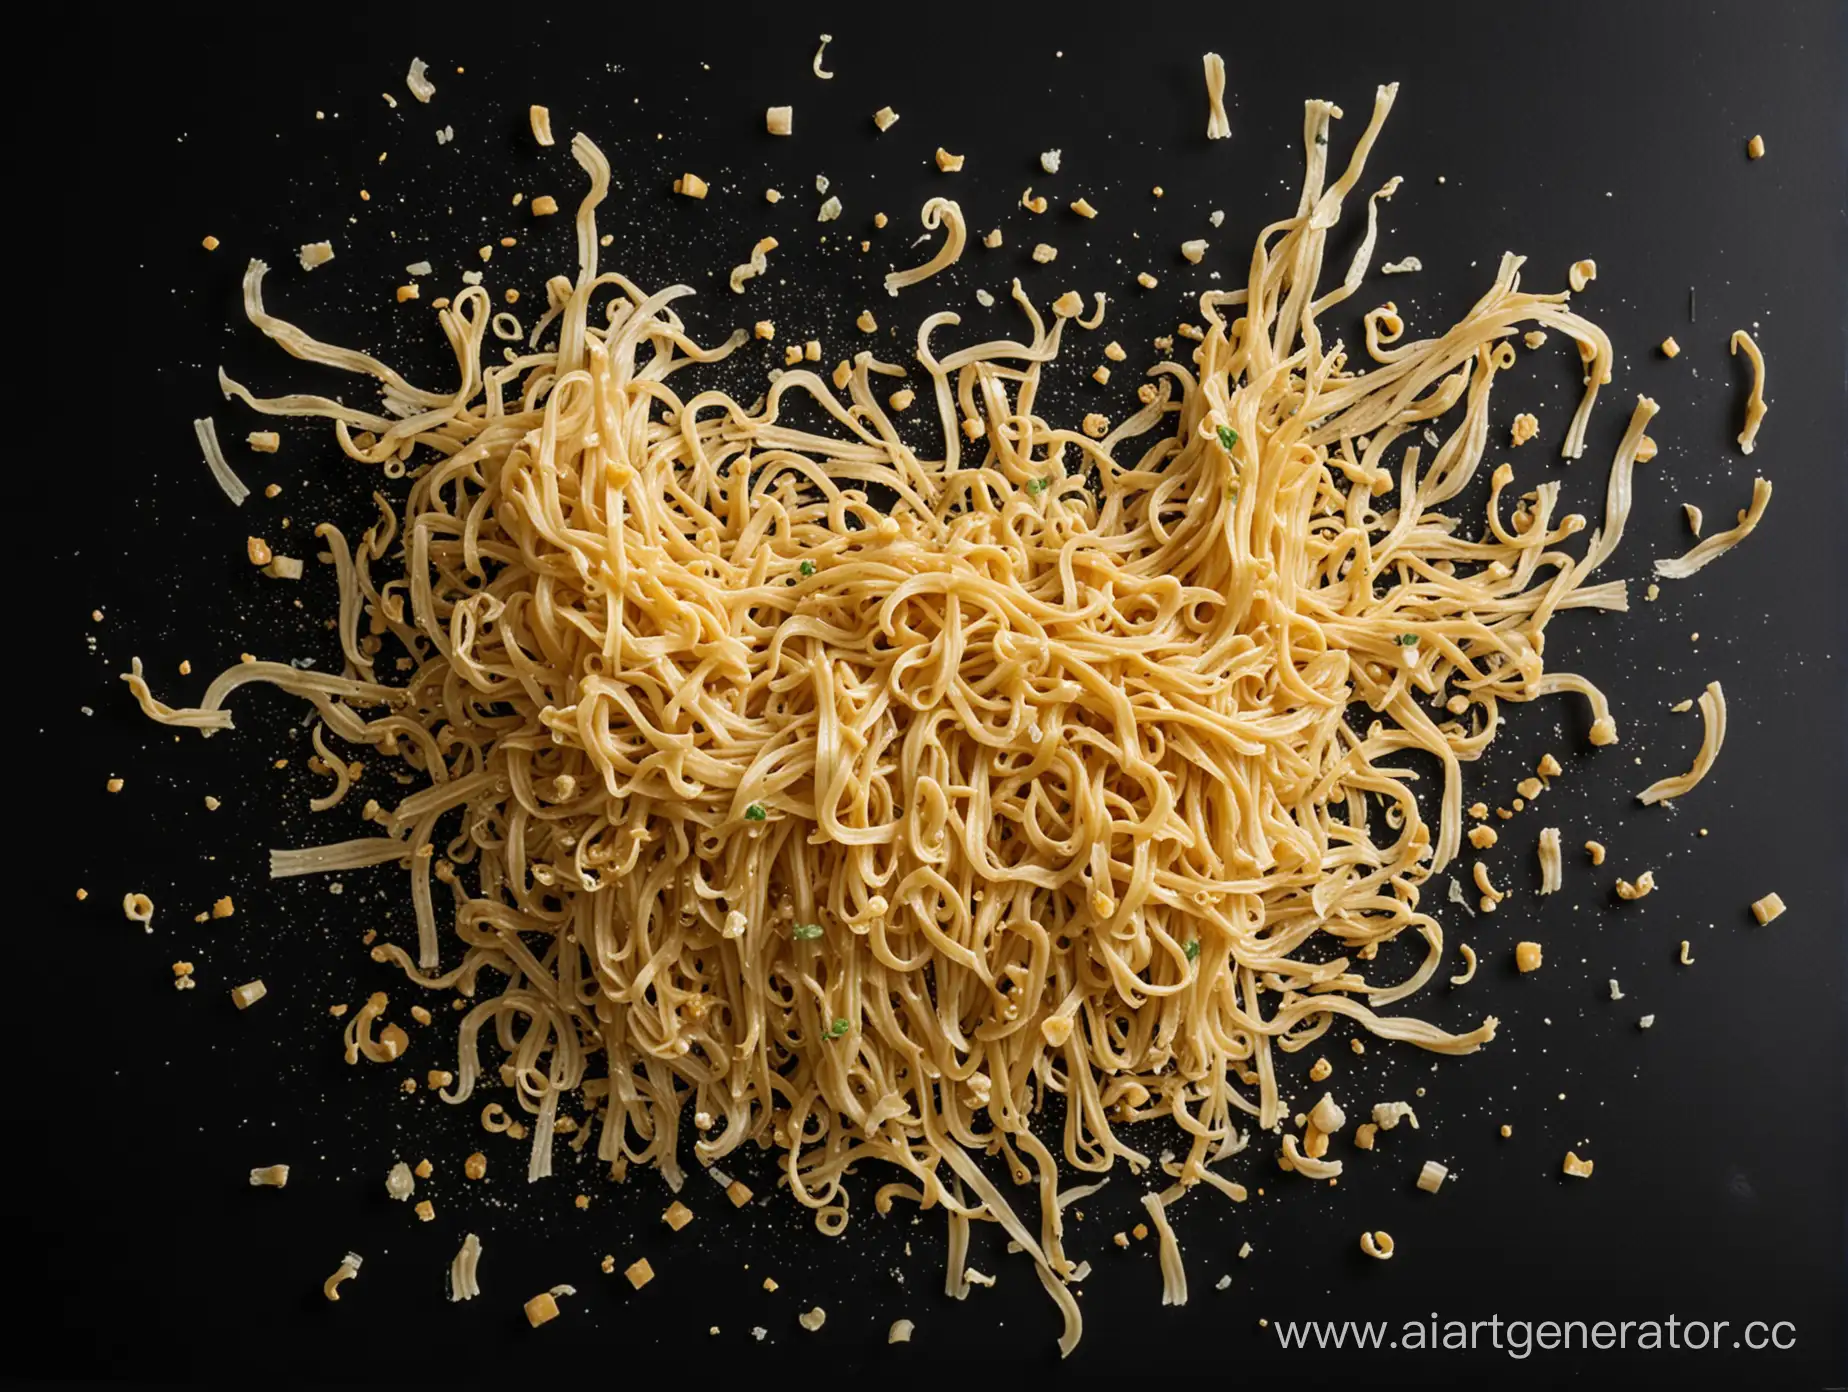 Vibrant-Noodle-Explosion-on-Dramatic-Black-Background